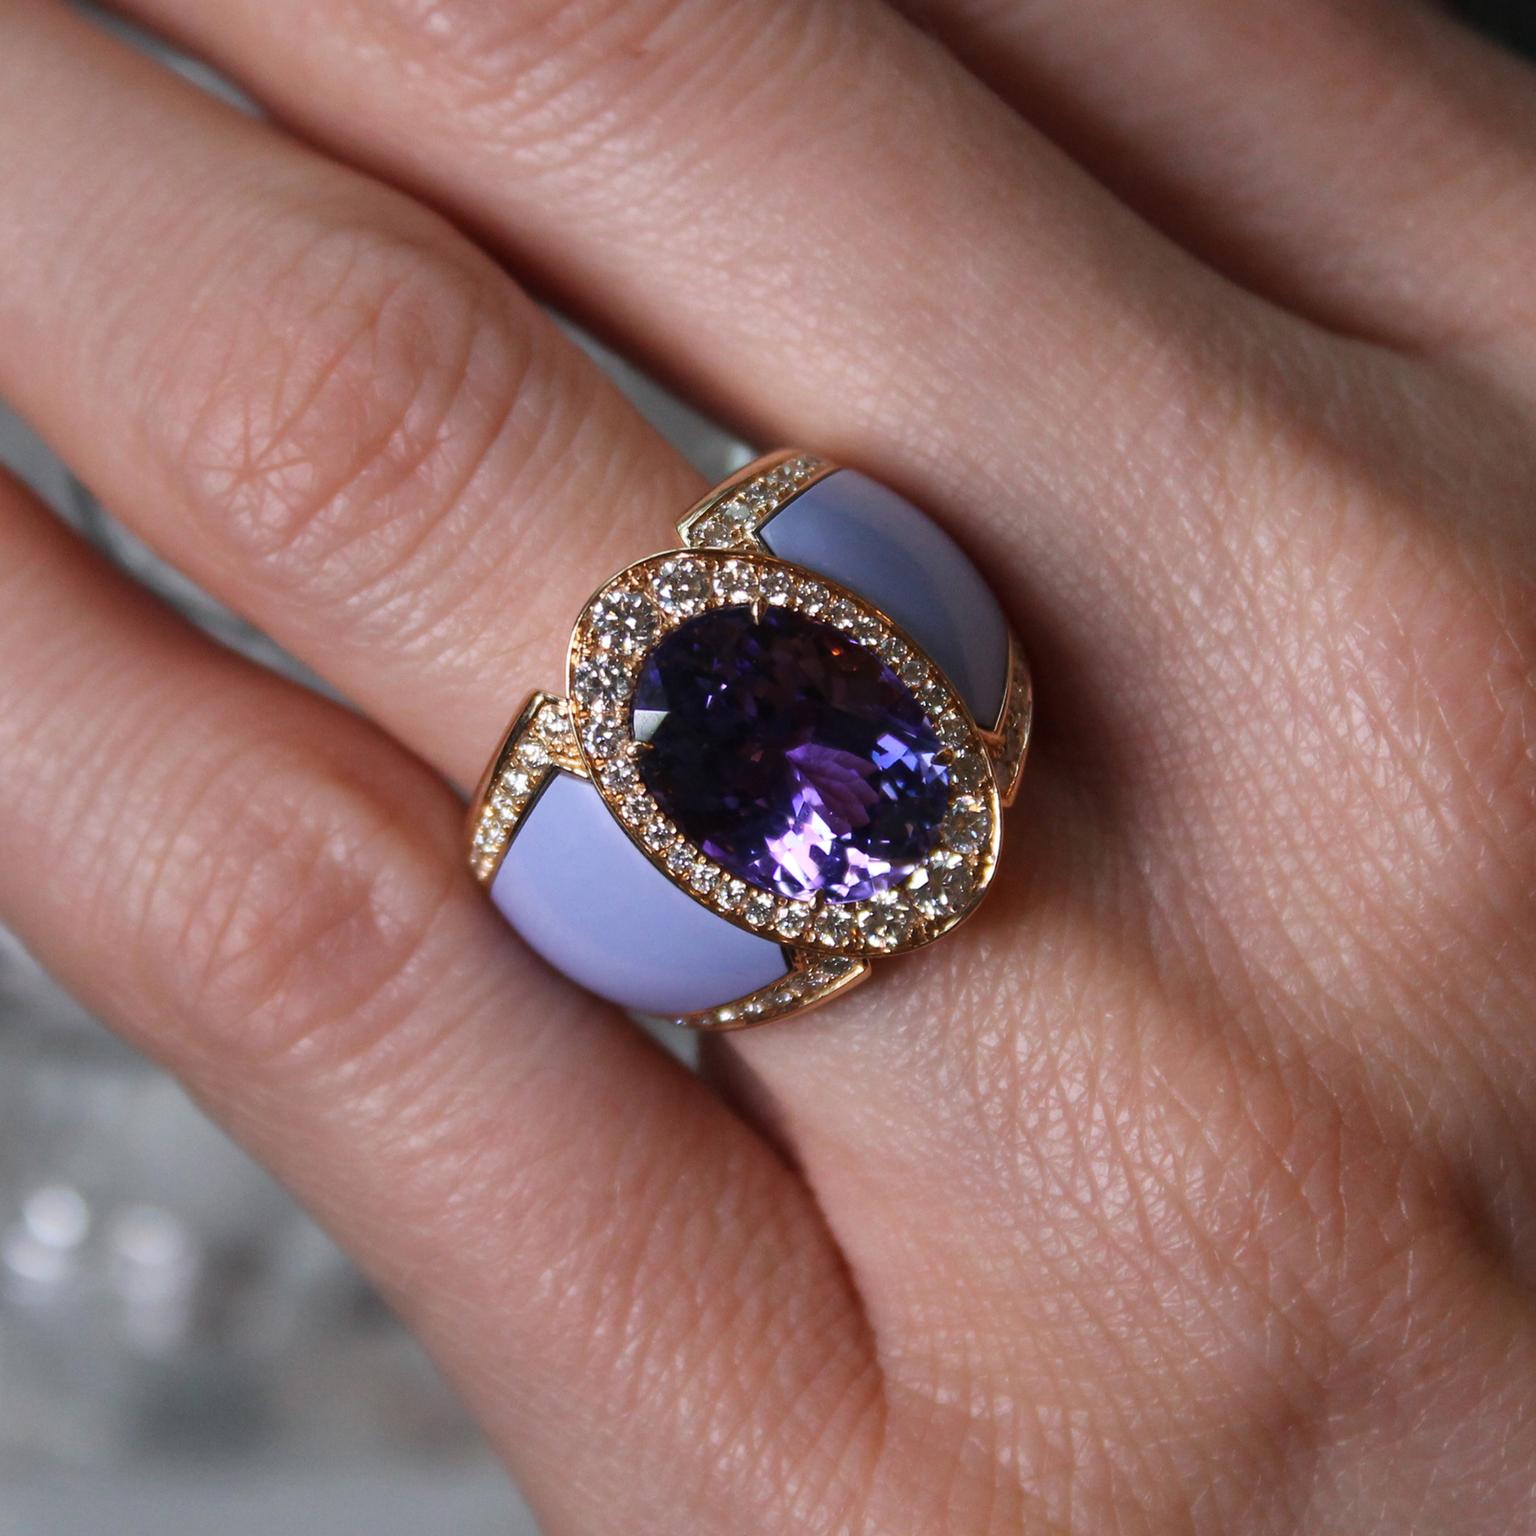 Doris Hangartner lilac tanzanite ring